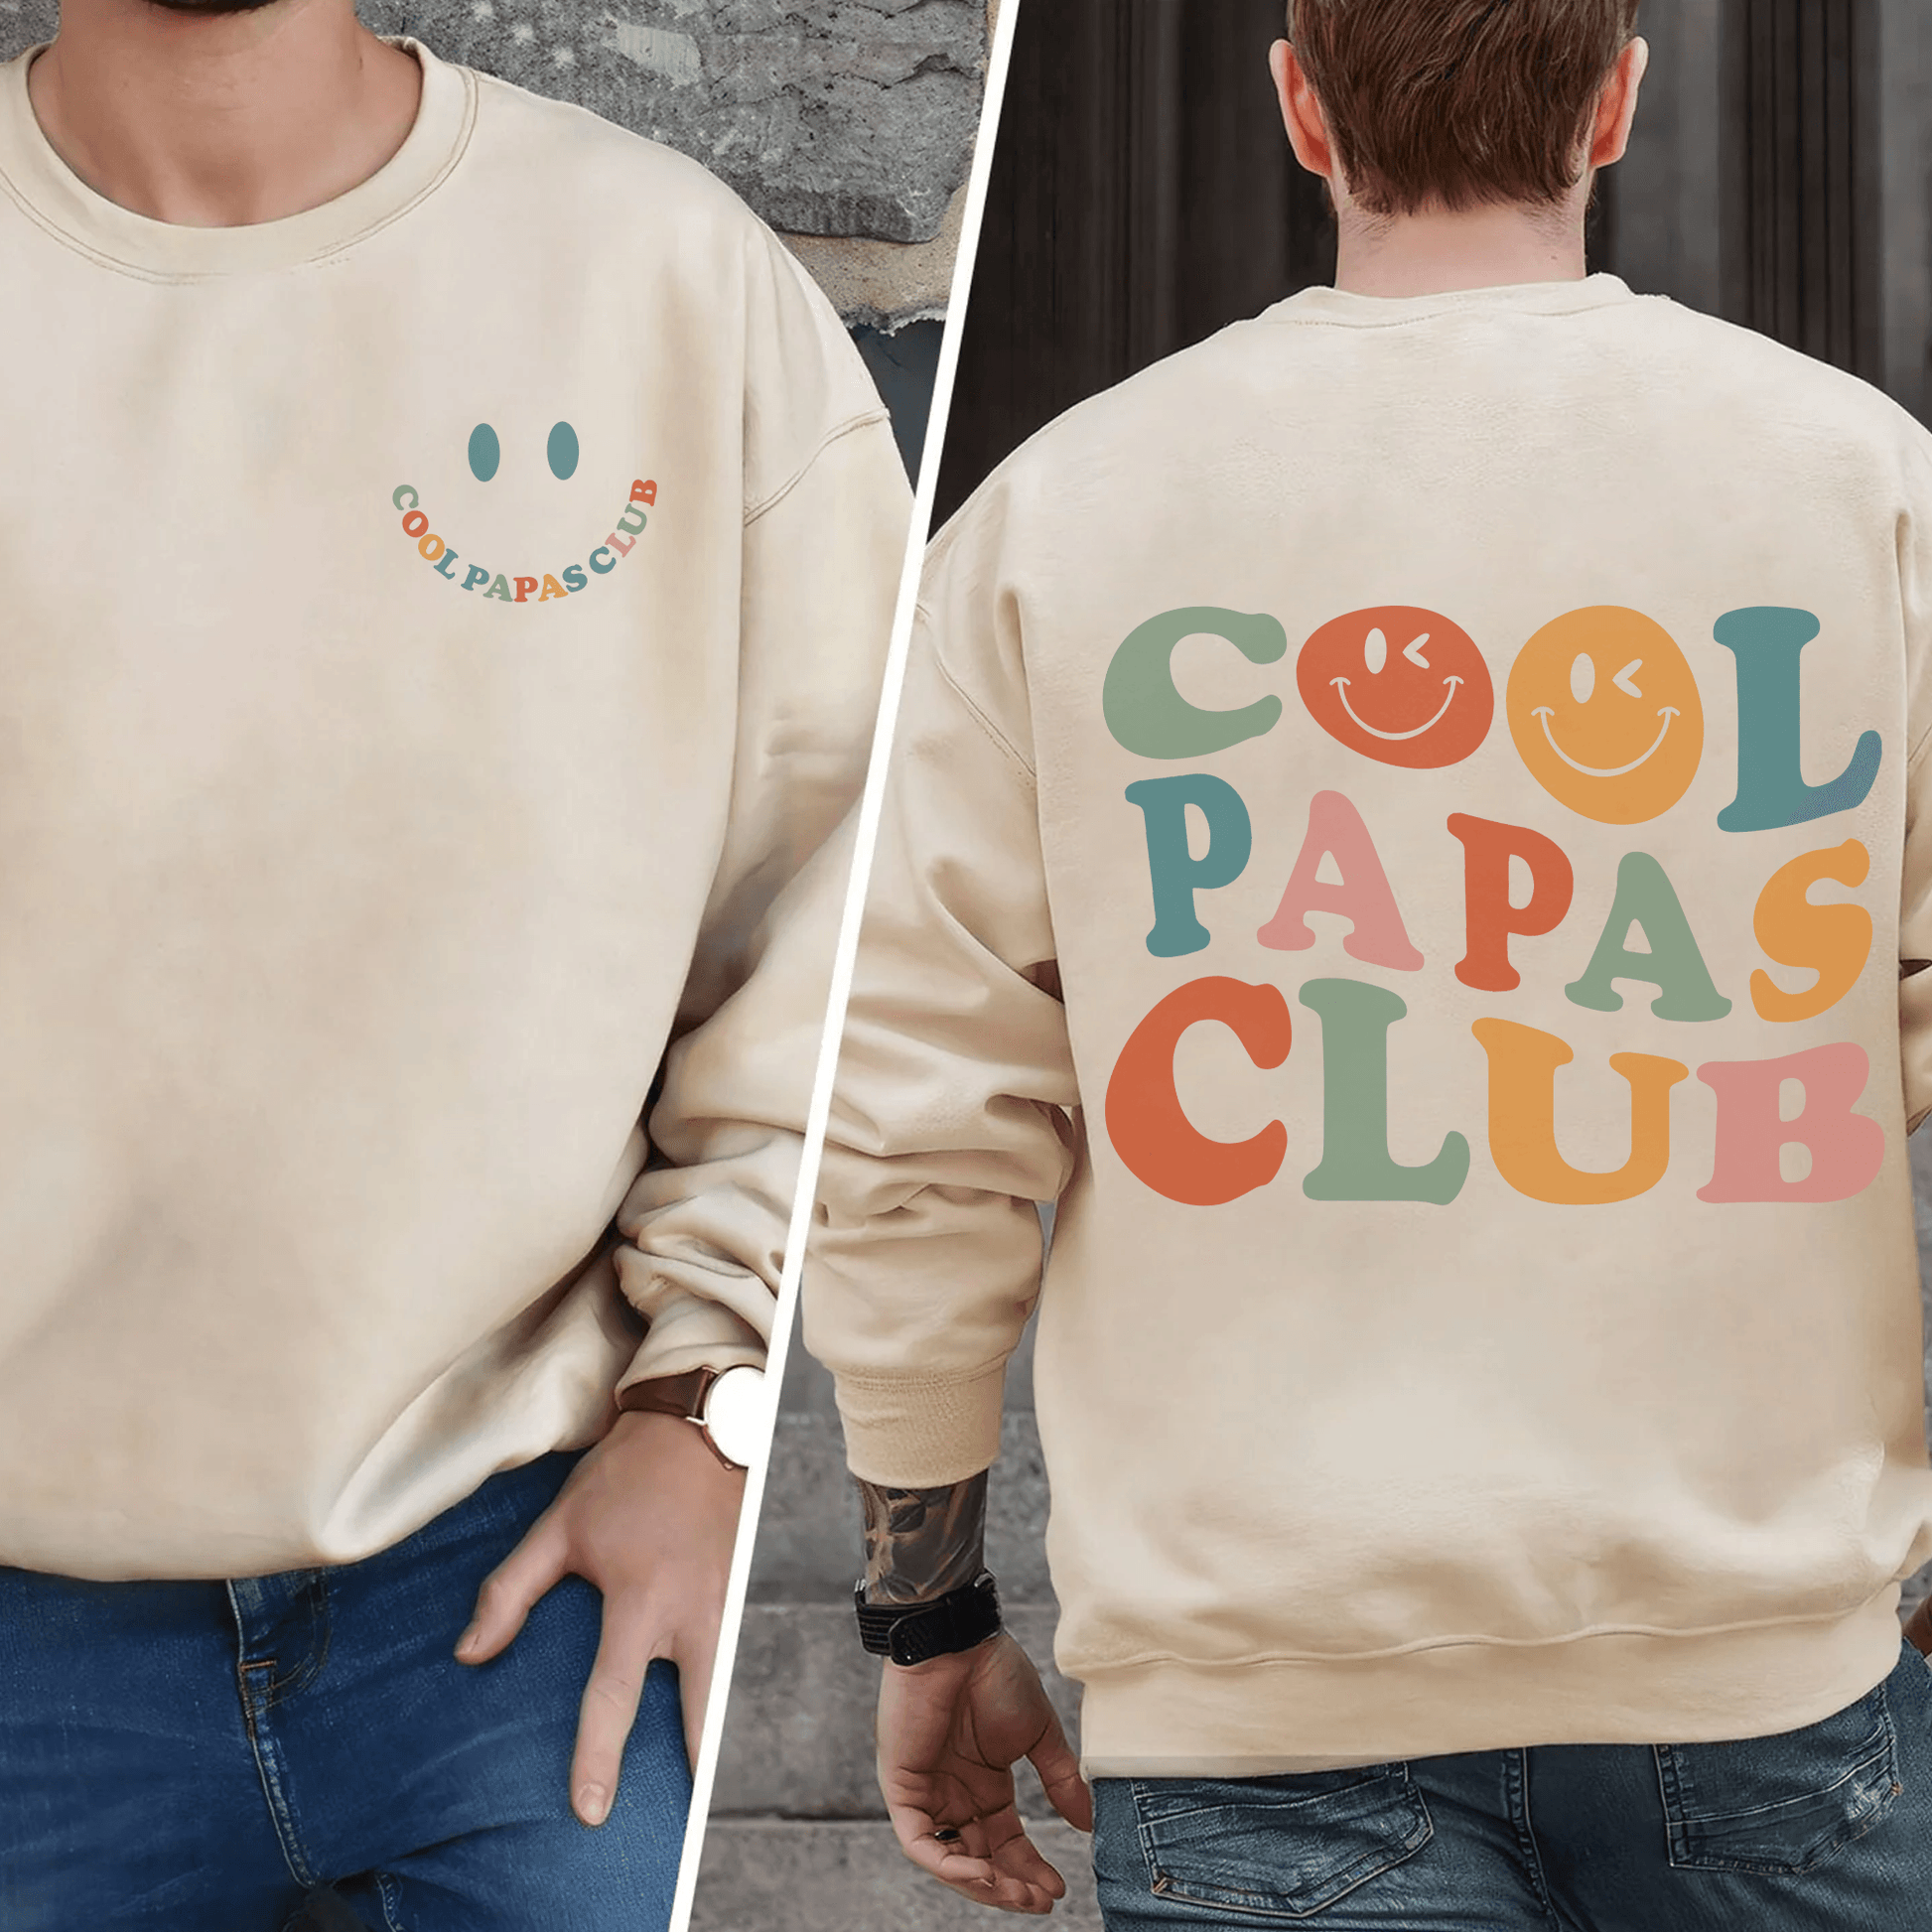 Cooles Papas Club-Sweatshirt, Cooles Papa Geschenk - GiftHaus